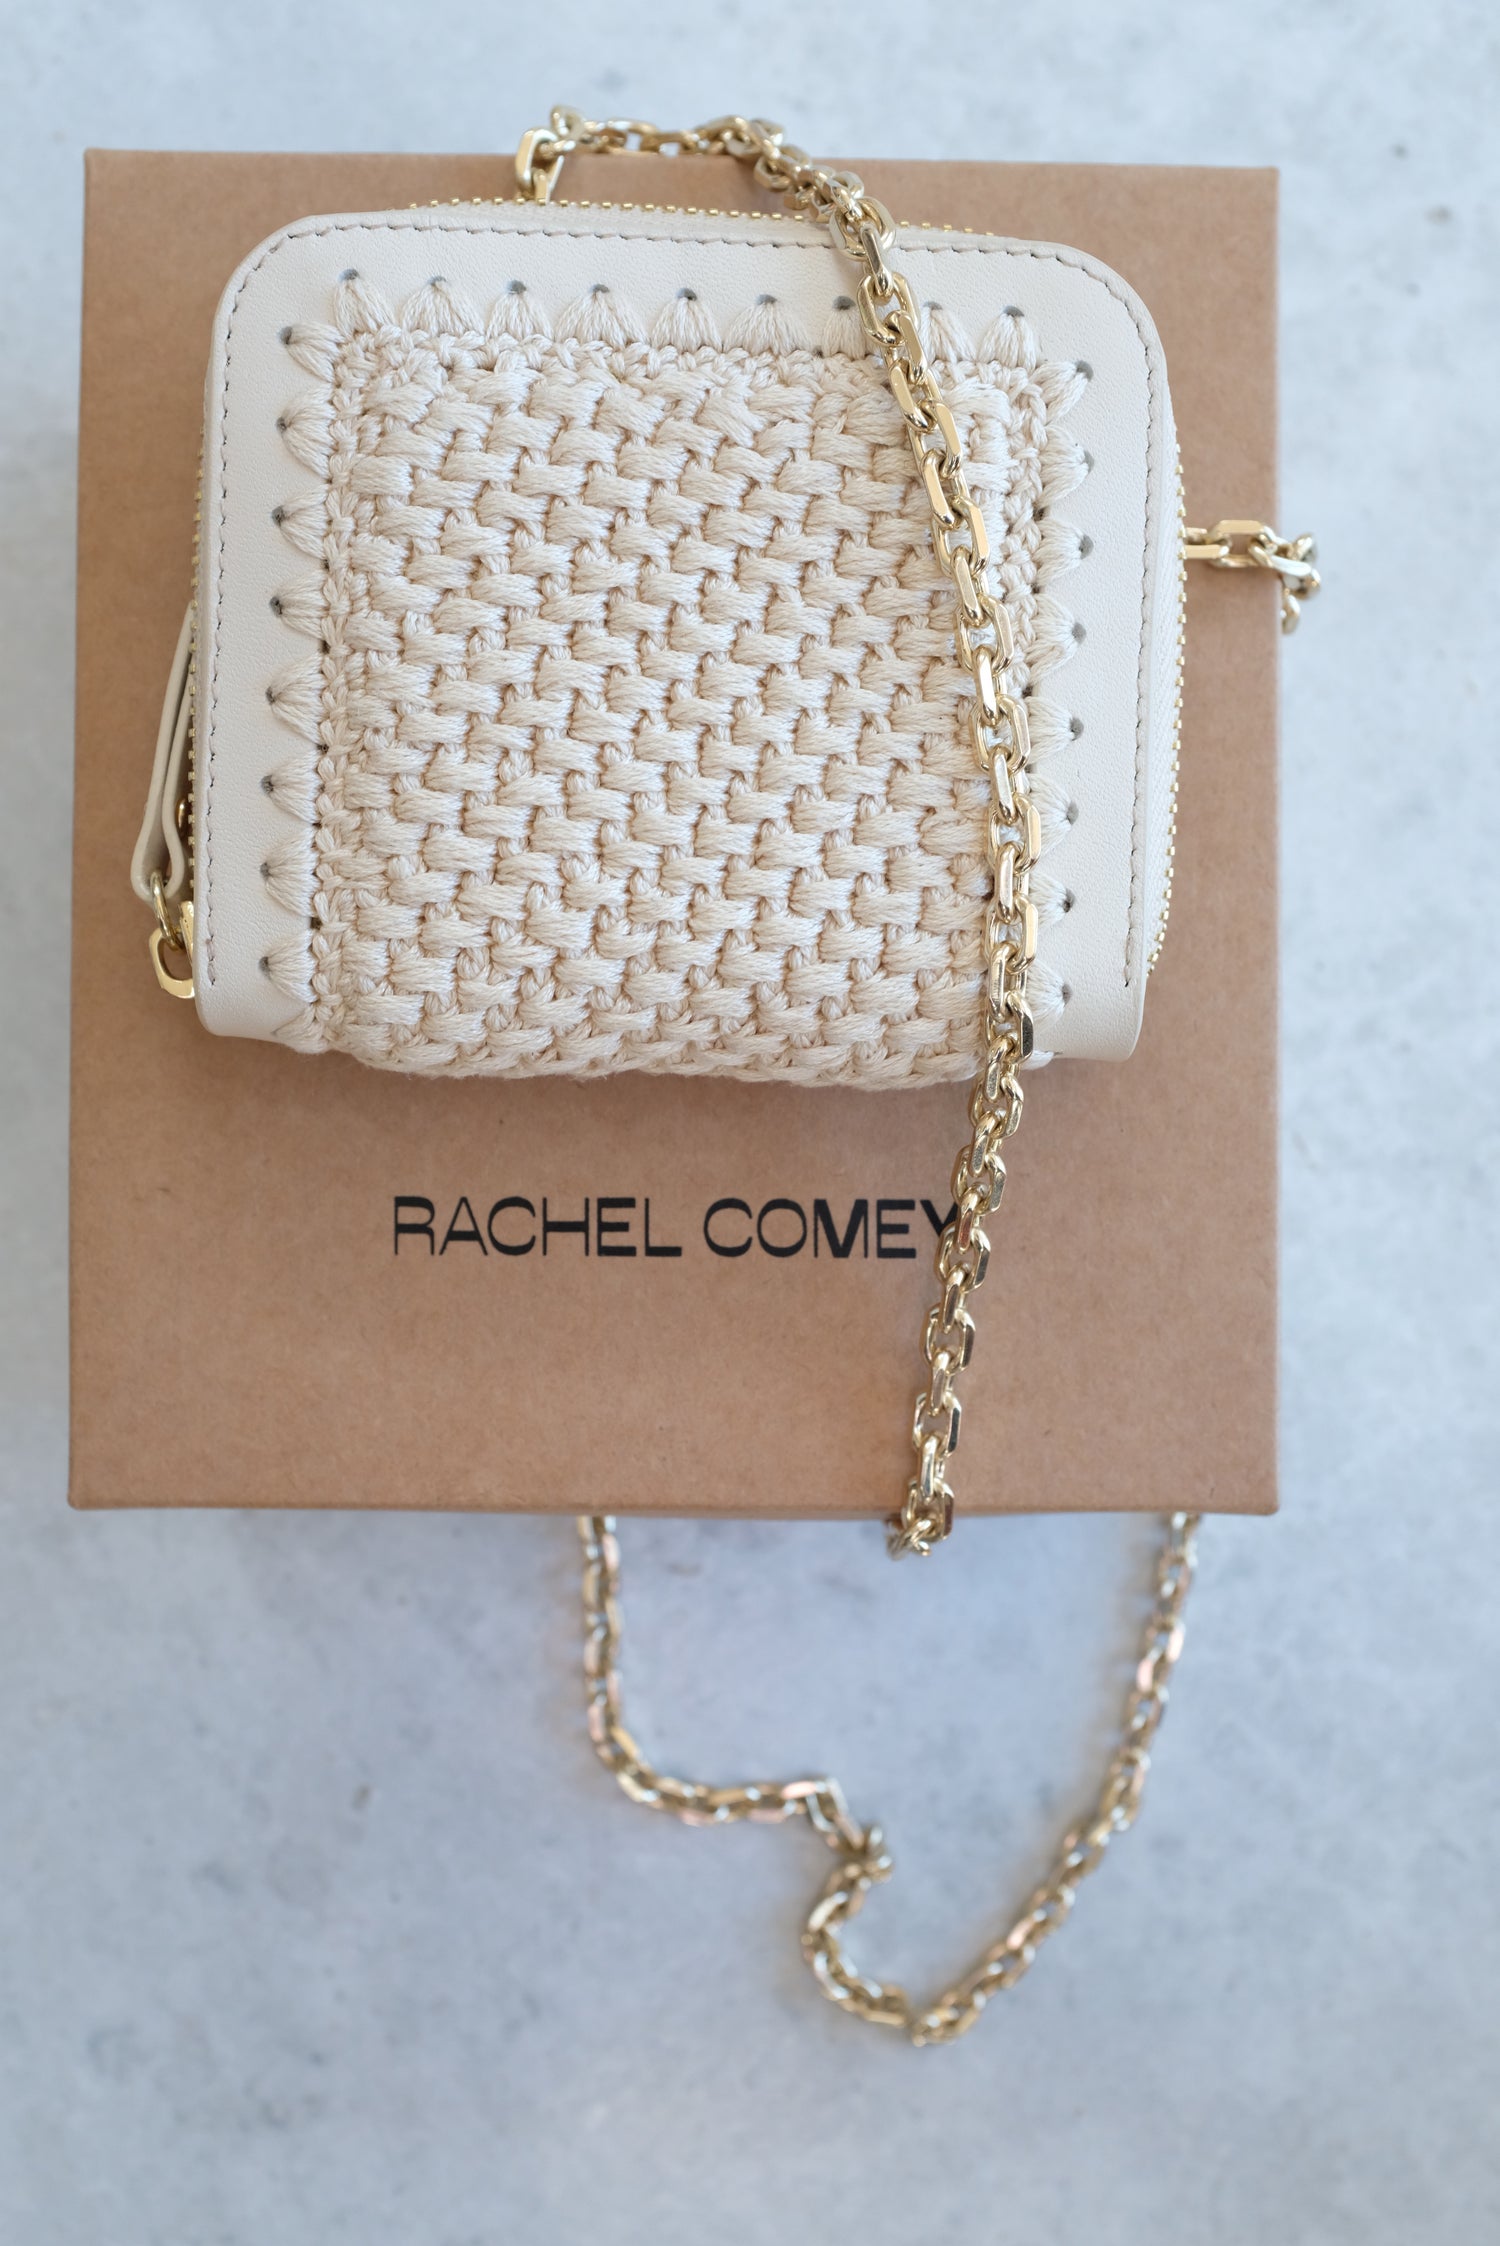 Rachel Comey Pochette Bag